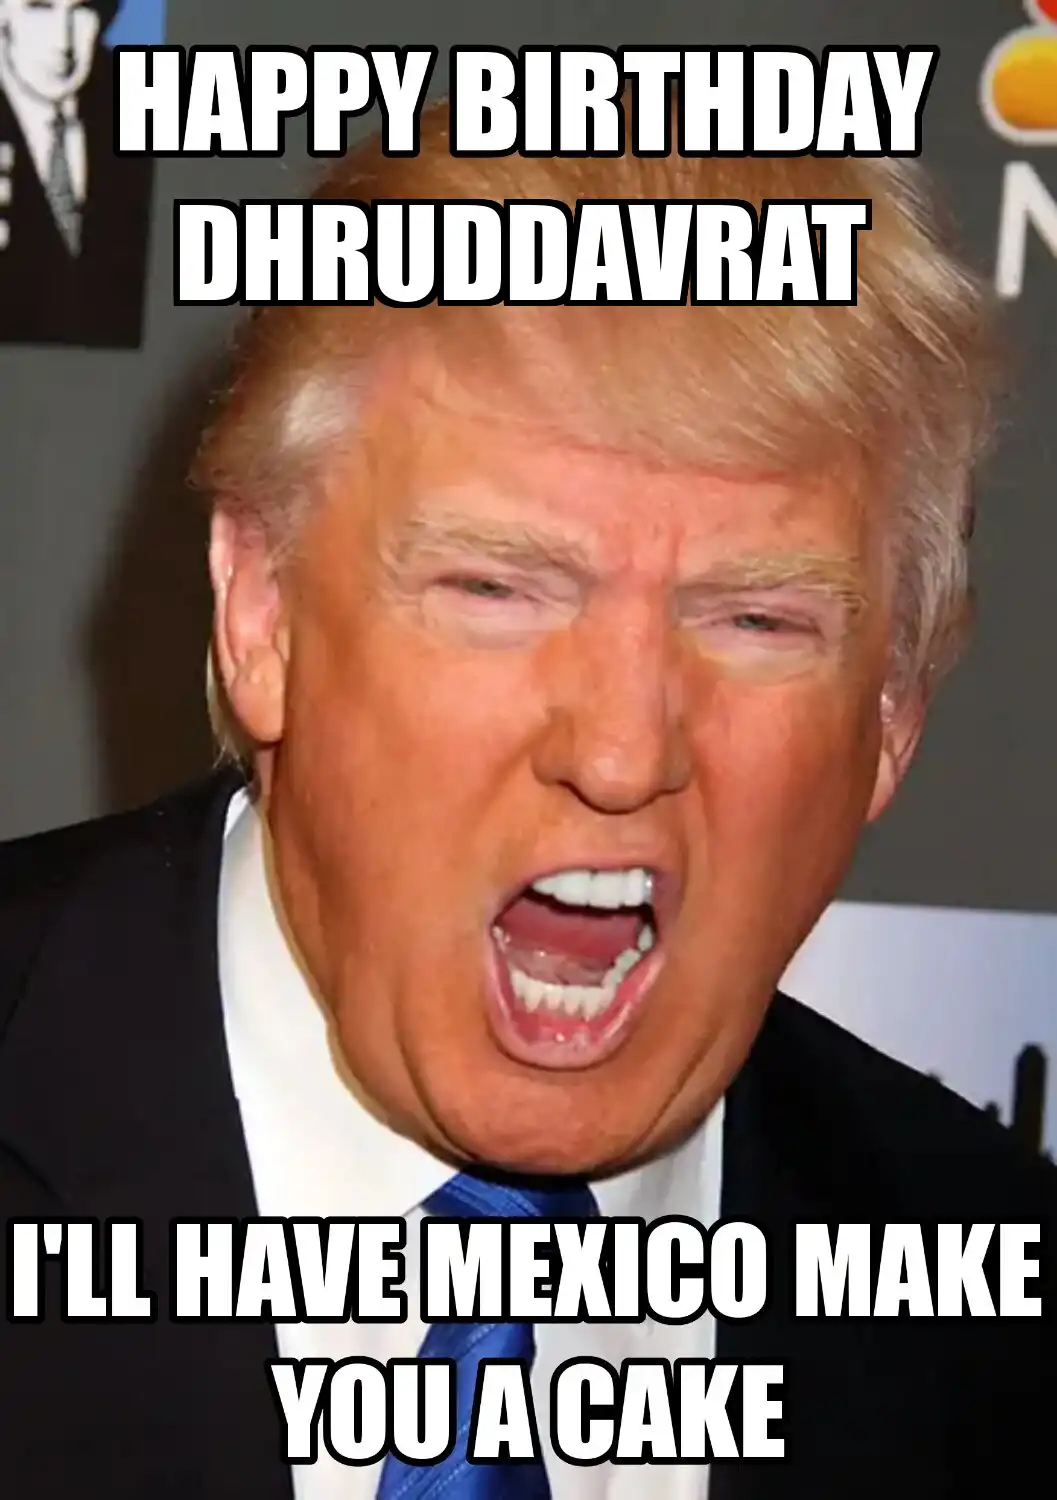 Happy Birthday Dhruddavrat Mexico Make You A Cake Meme